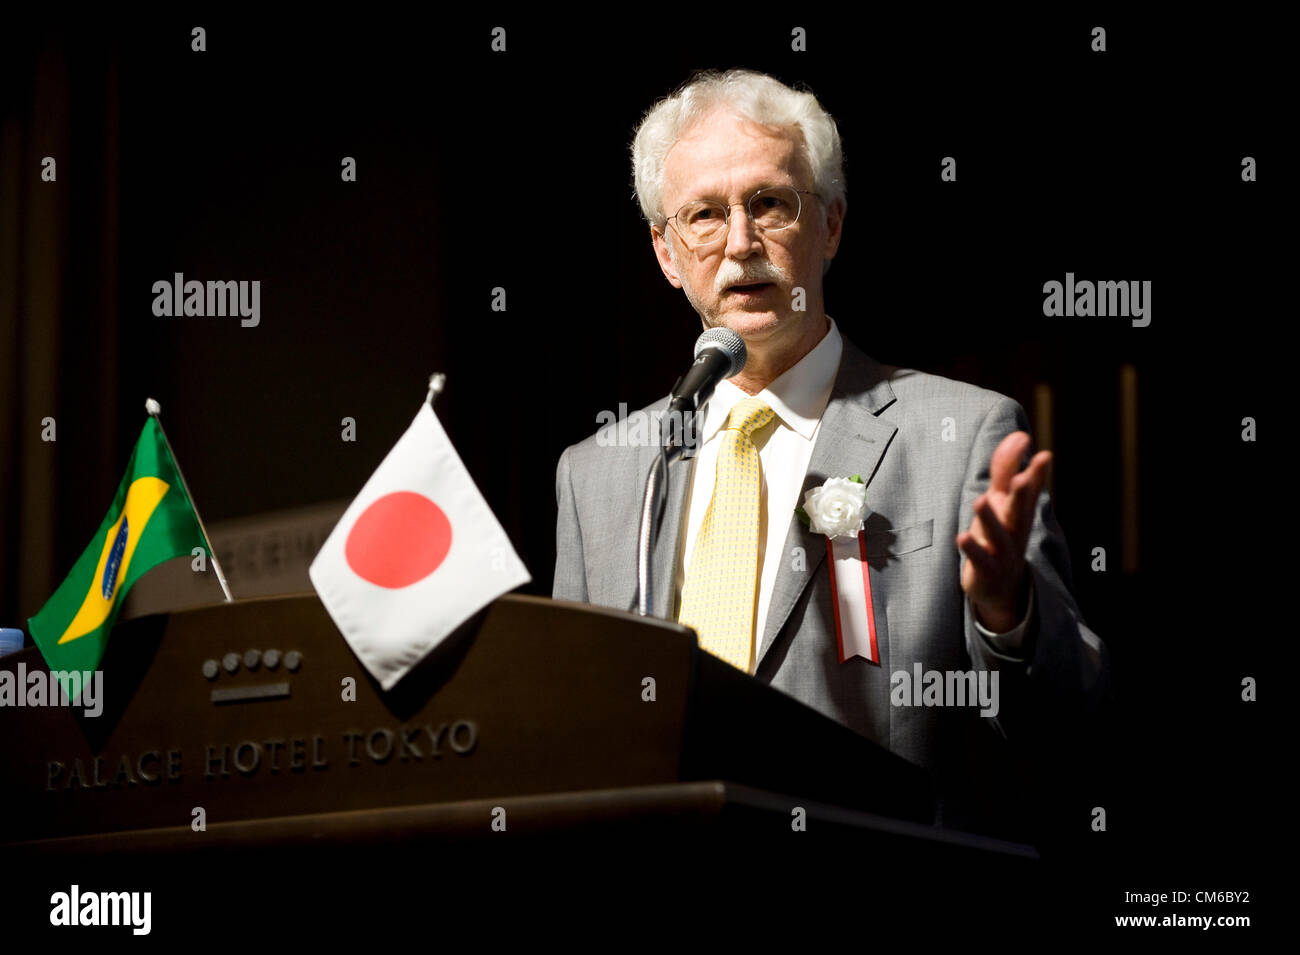 Almir Barbassa, CFO of Petrobras, speaks during the Brazil Economic Conference in Tokyo, Japan on 11 Oct. 2012. Stock Photo